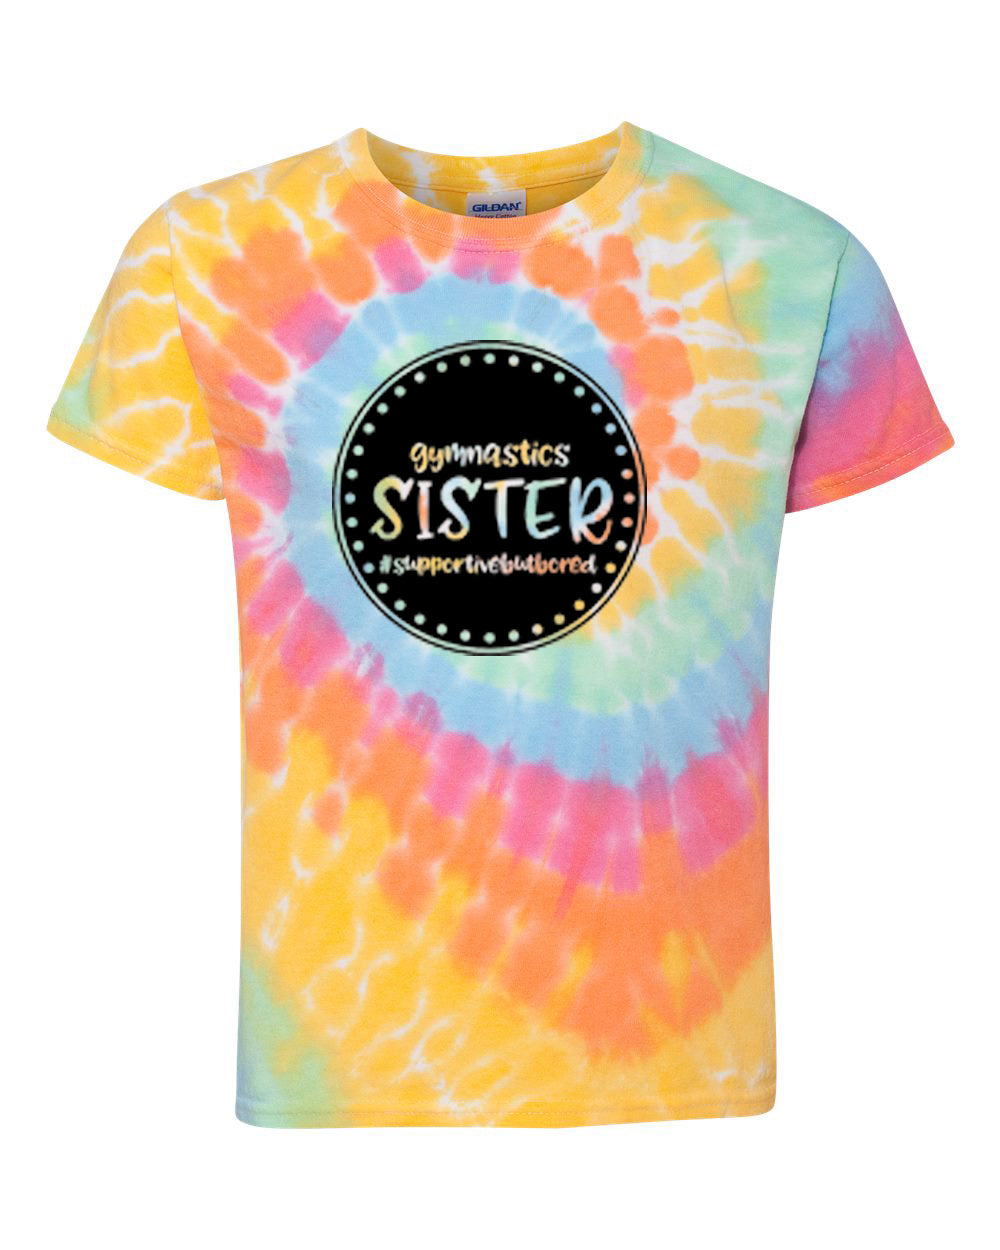 Gymnastics Sister Adult Tie Dye T-Shirt